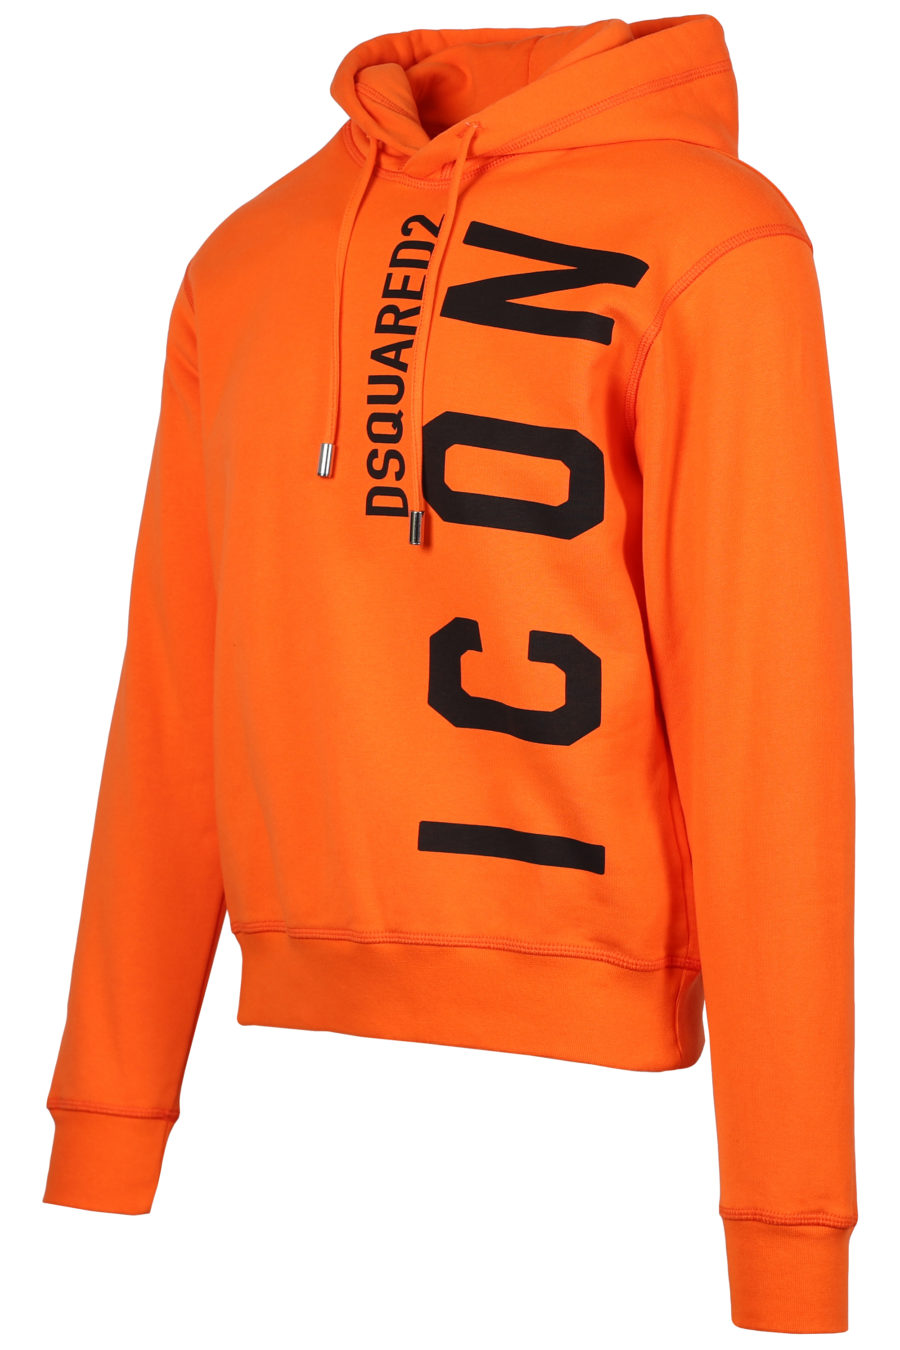 Sudadera naranja con capucha y logo "Icon" vertical - IMG 2314